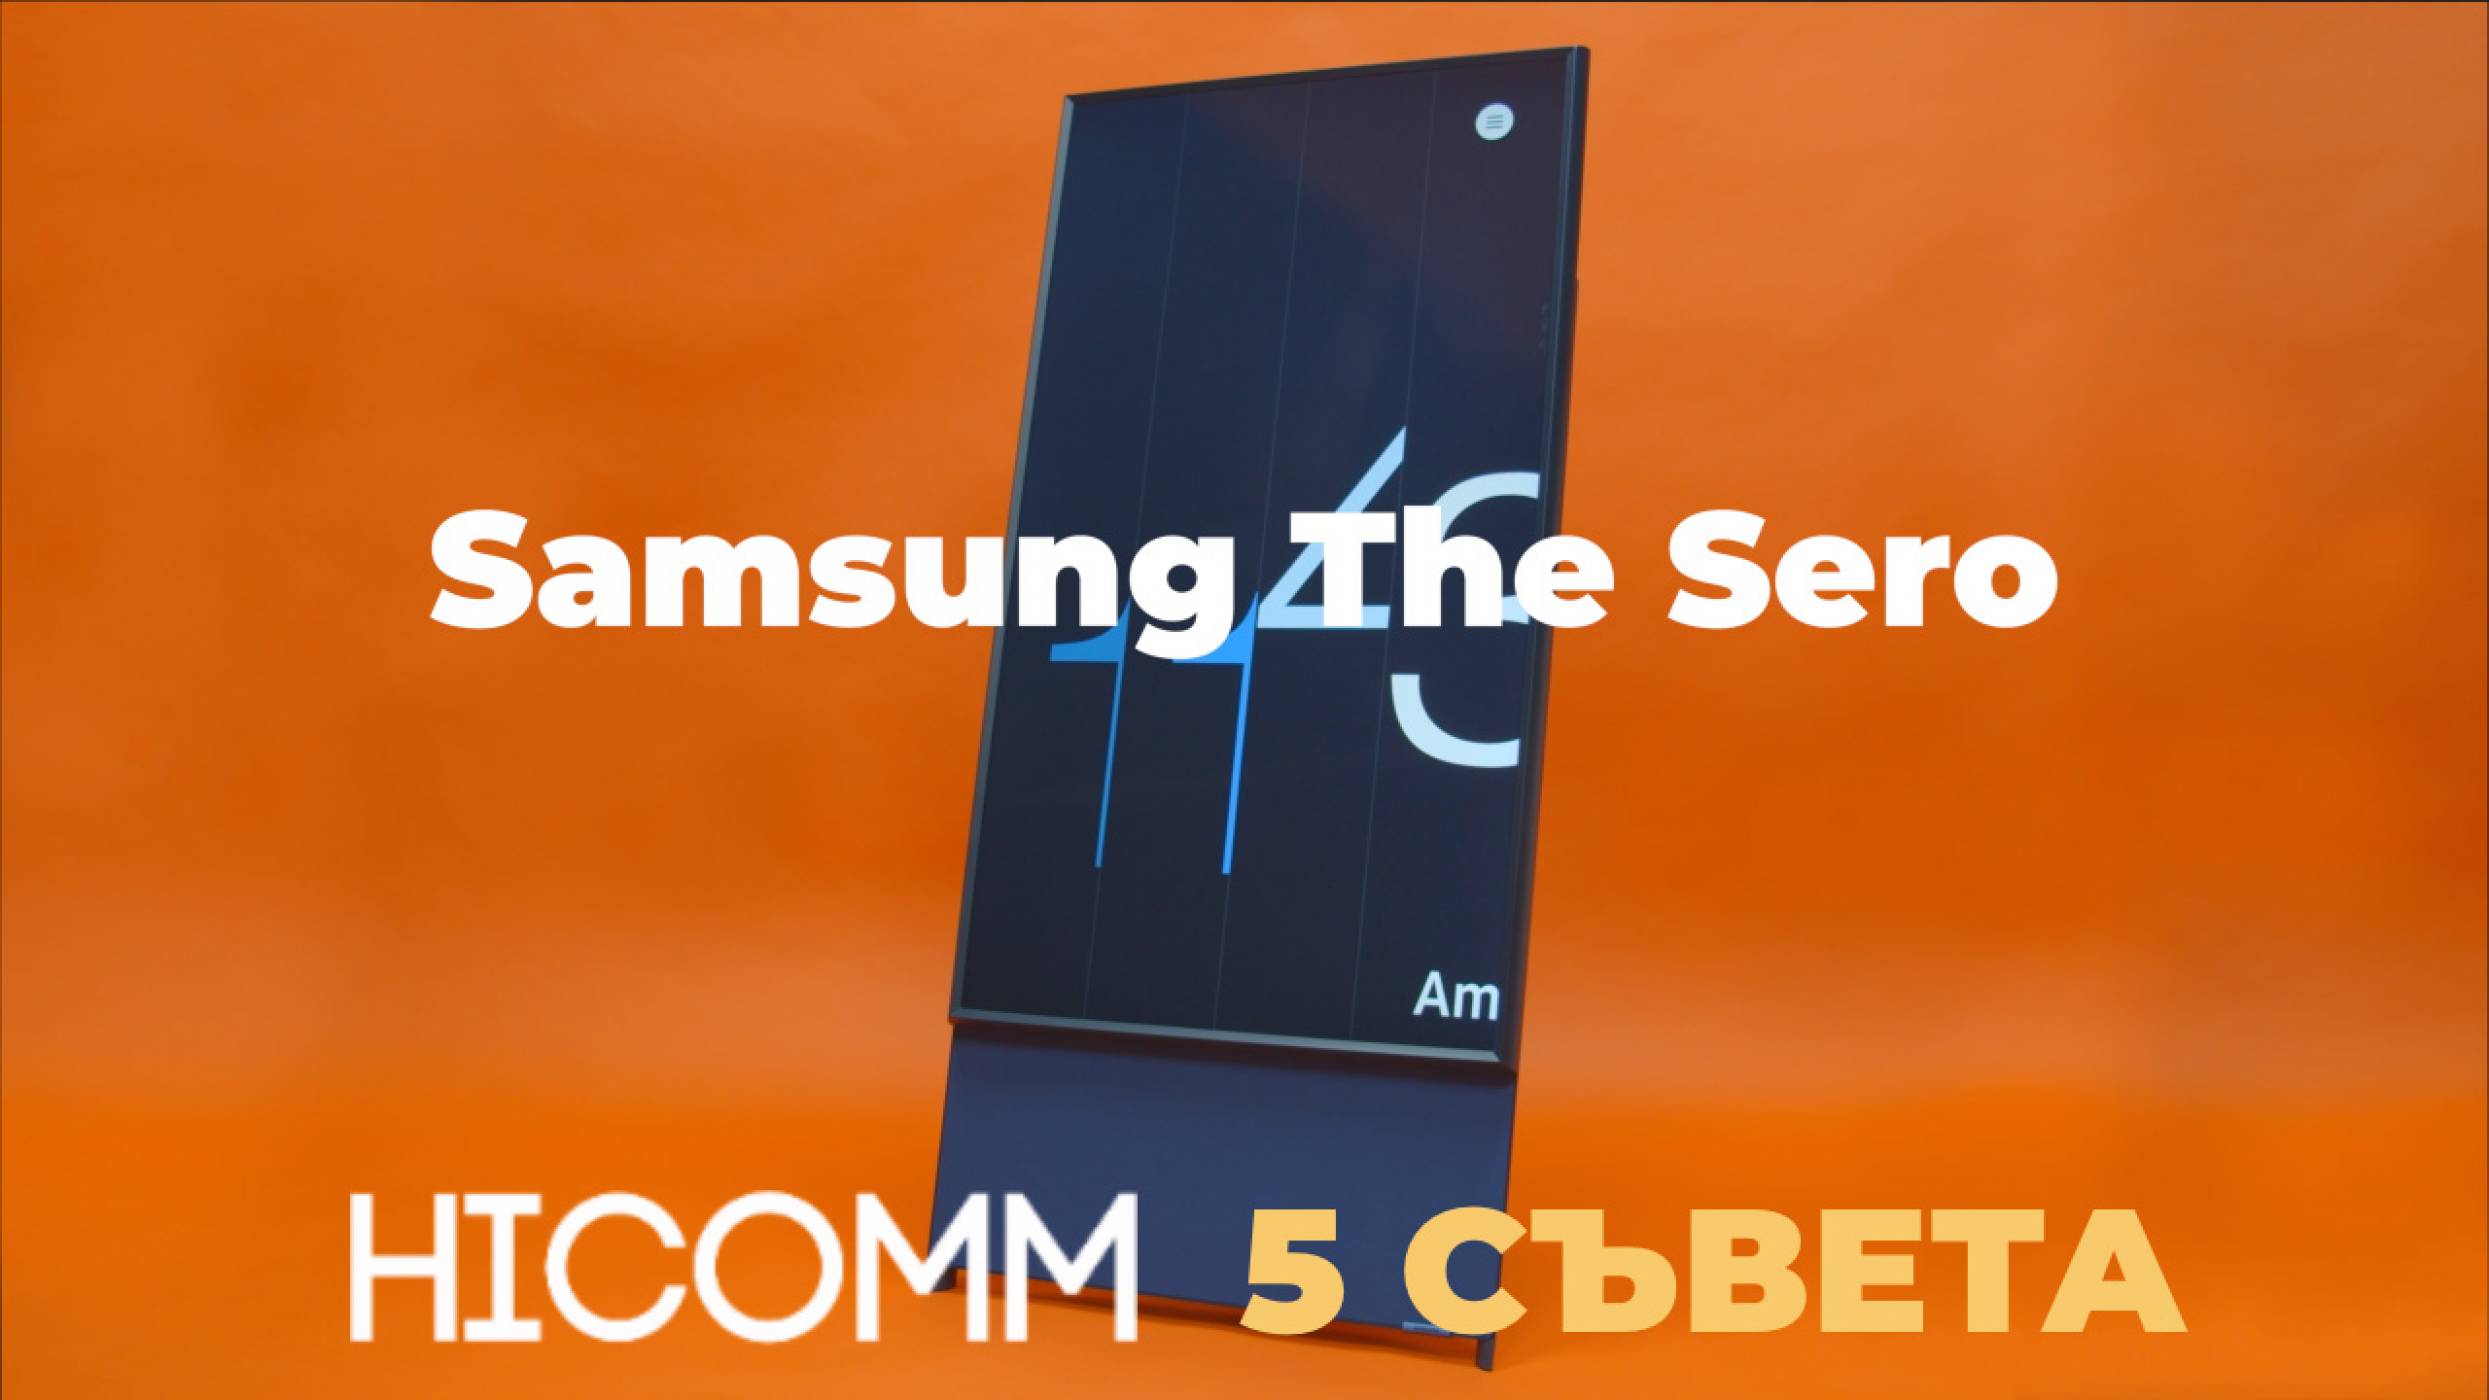 HICOMM 5 СЪВЕТА: Samsung The Sero (ВИДЕО)